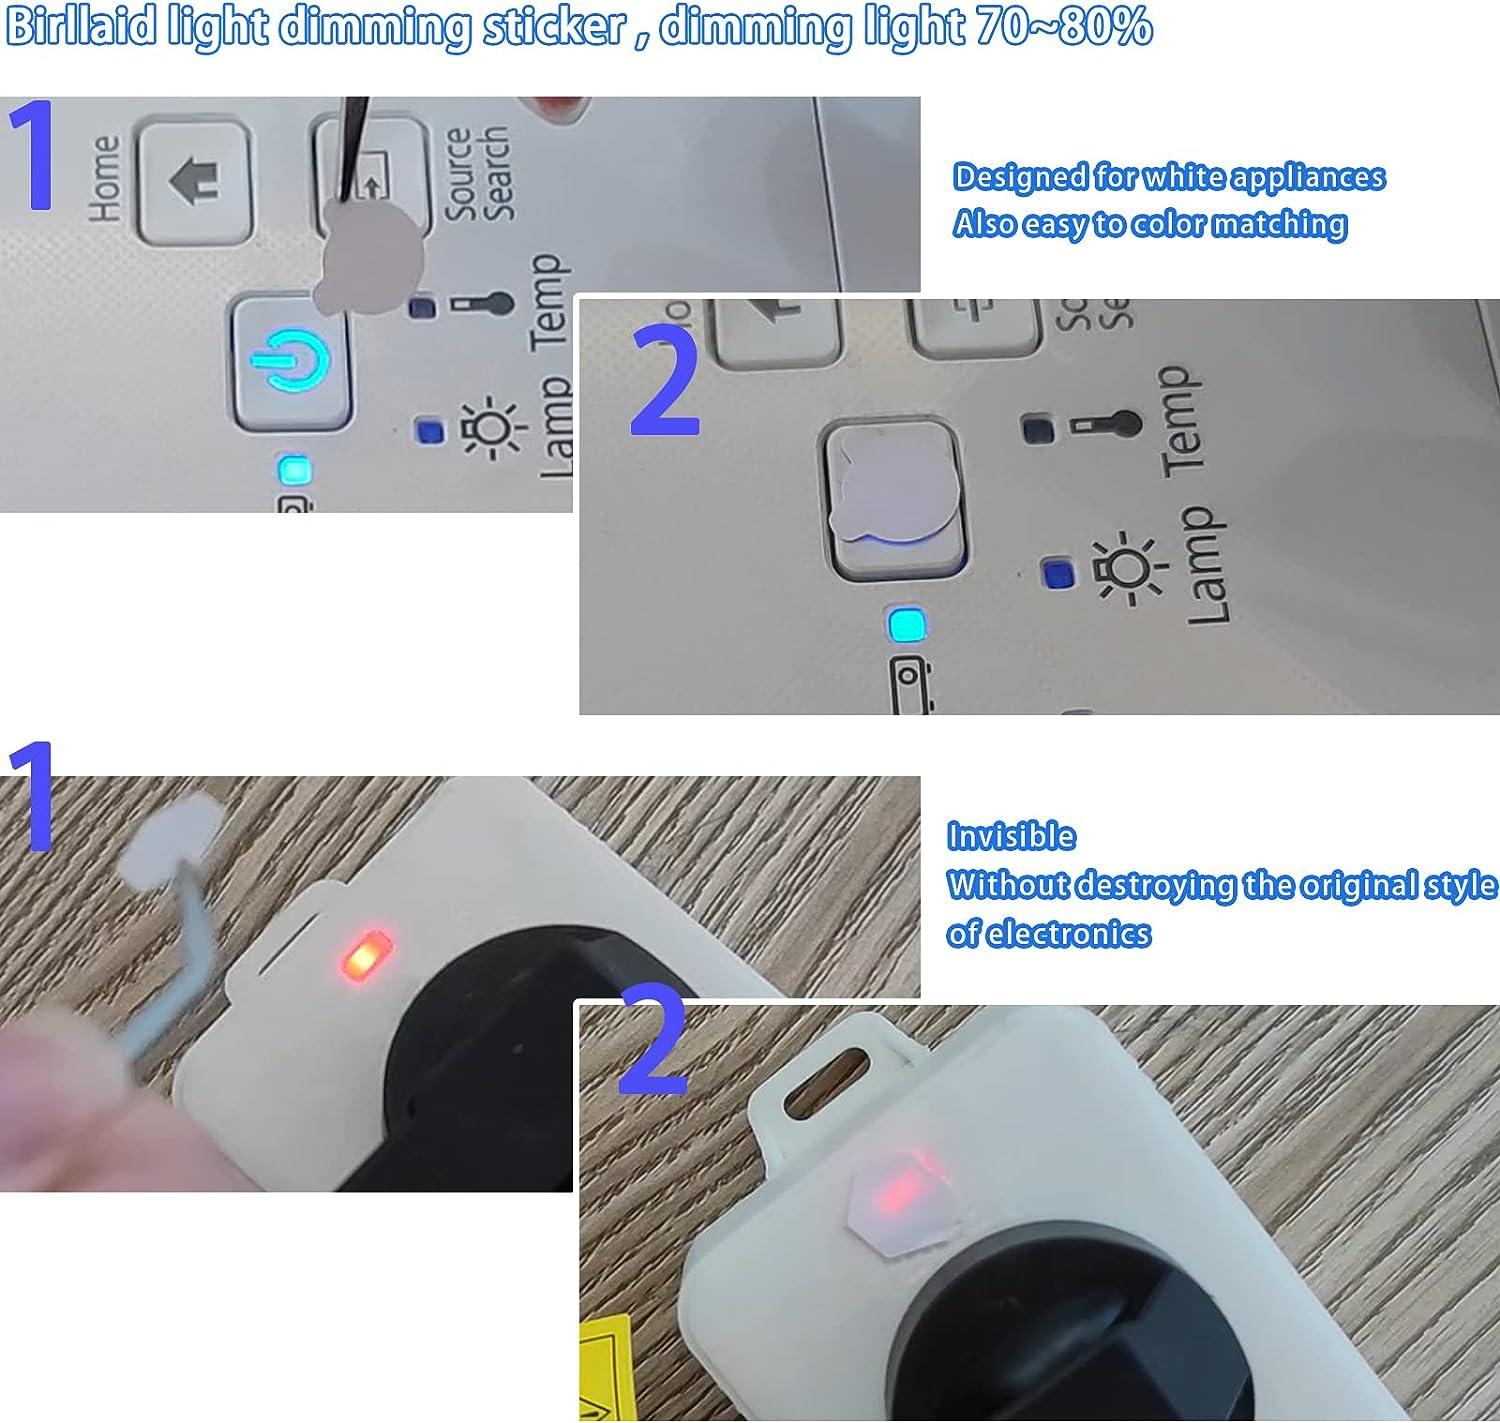 Birllaid Light Blocking Stickers White, LED Light Dimming Sticker